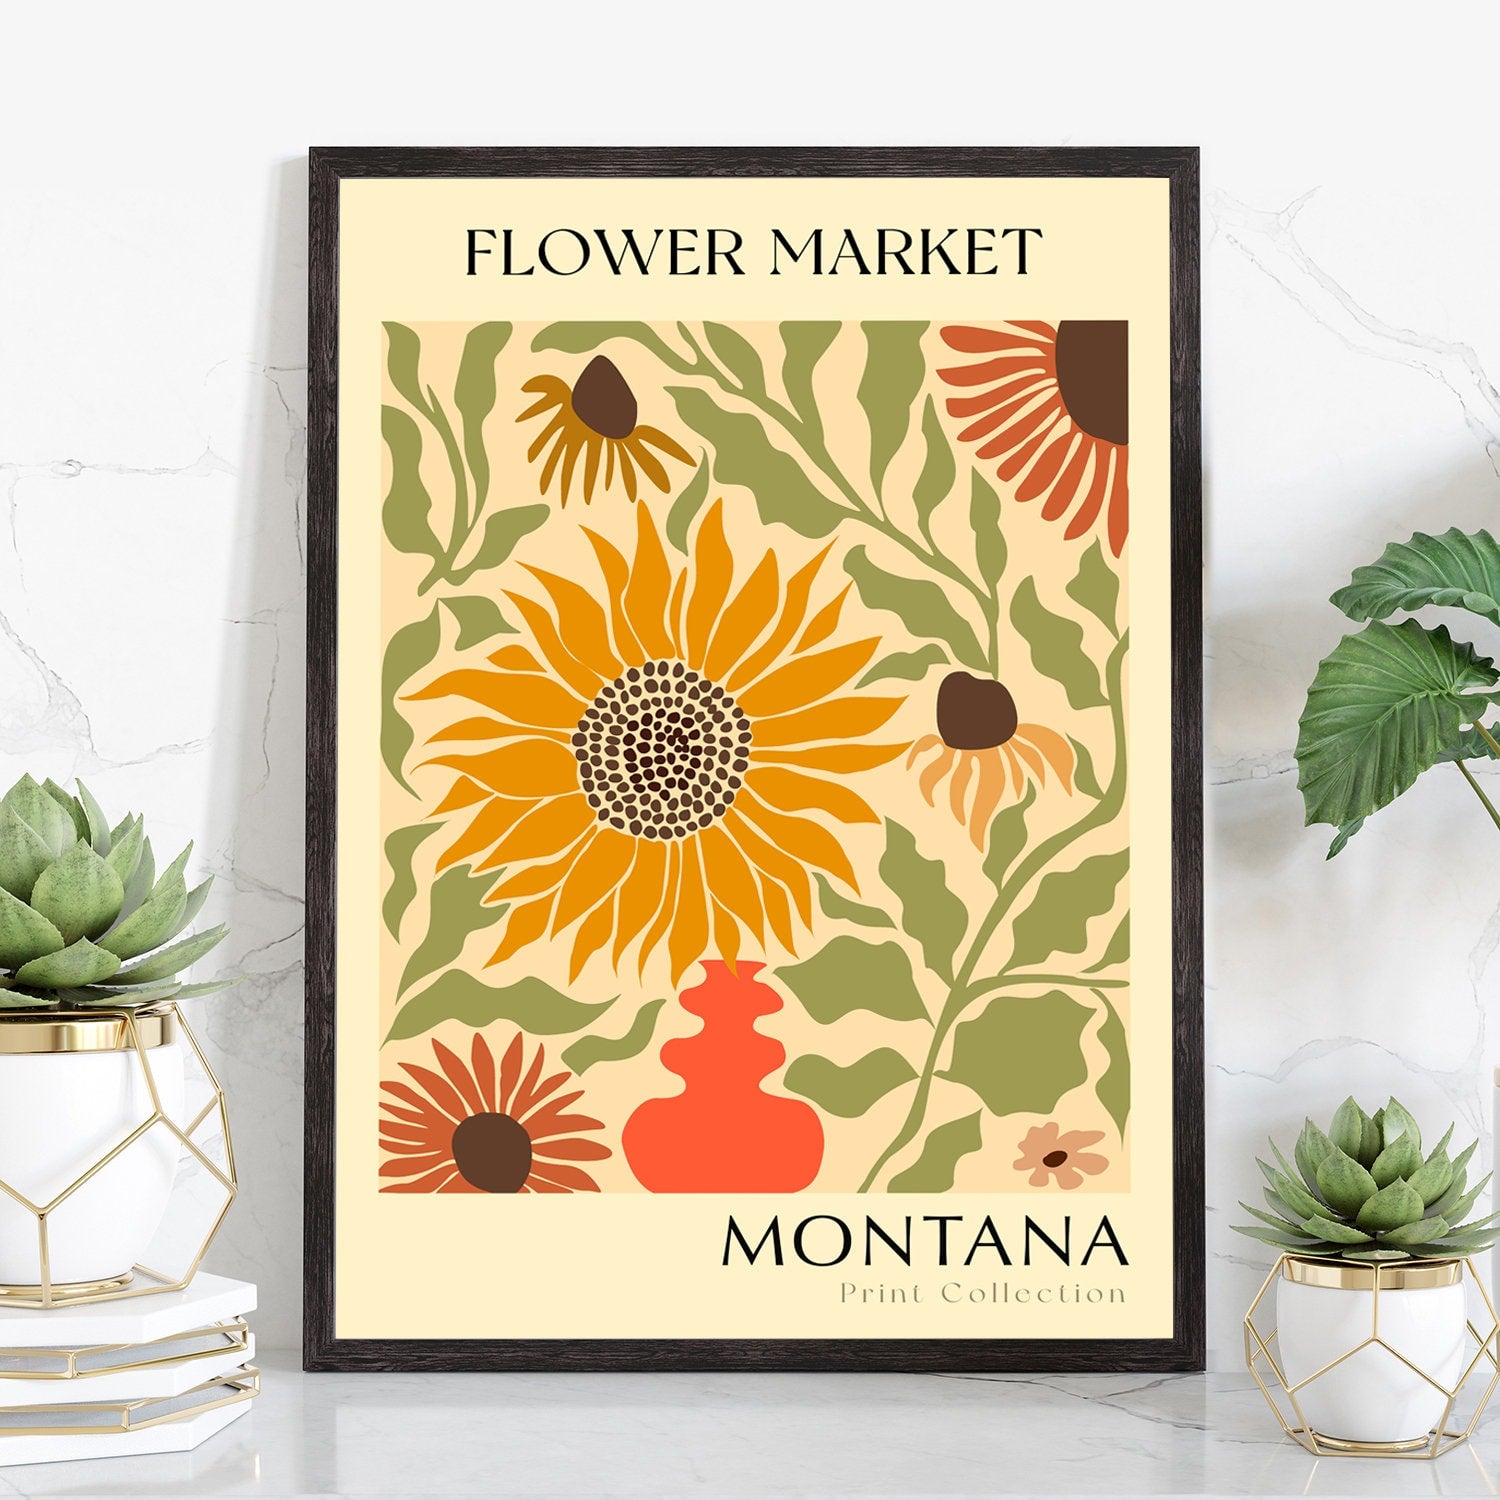 Montana State flower print, USA states poster, Montana flower market poster, Botanical posters, Nature poster artwork, Boho floral wall art